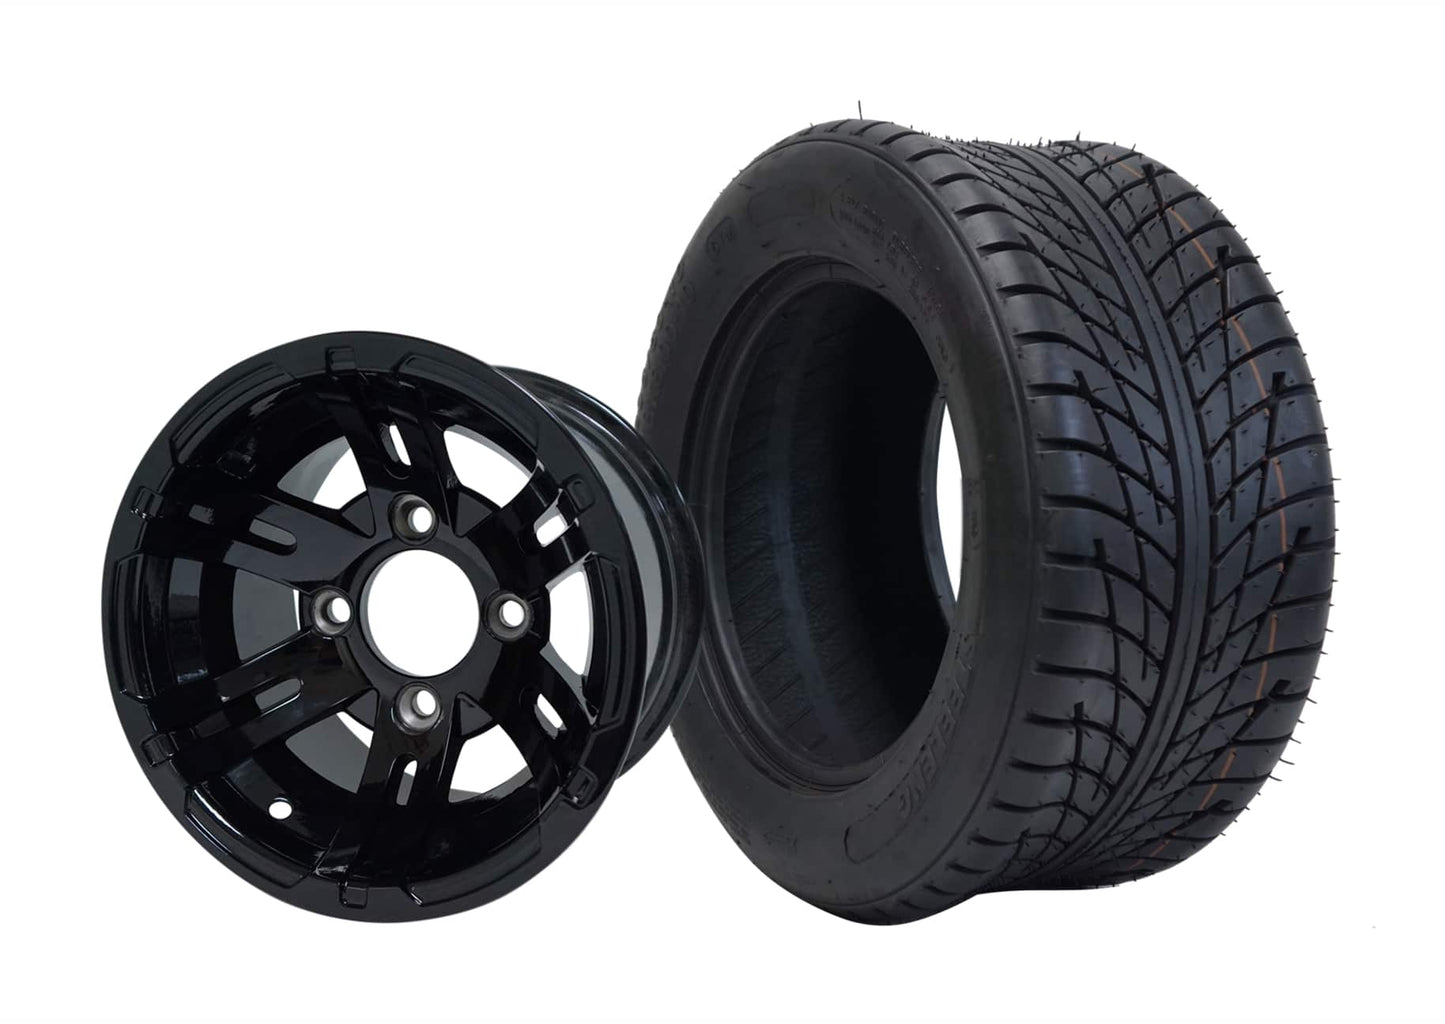 BNDL-TR1011-WH1001-LN0002-CC0002 – SGC 10″ Bulldog Glossy Black Wheel – Aluminum Alloy / STEELENG 205/50-10 Low Profile Tire DOT Approved - Set of 4